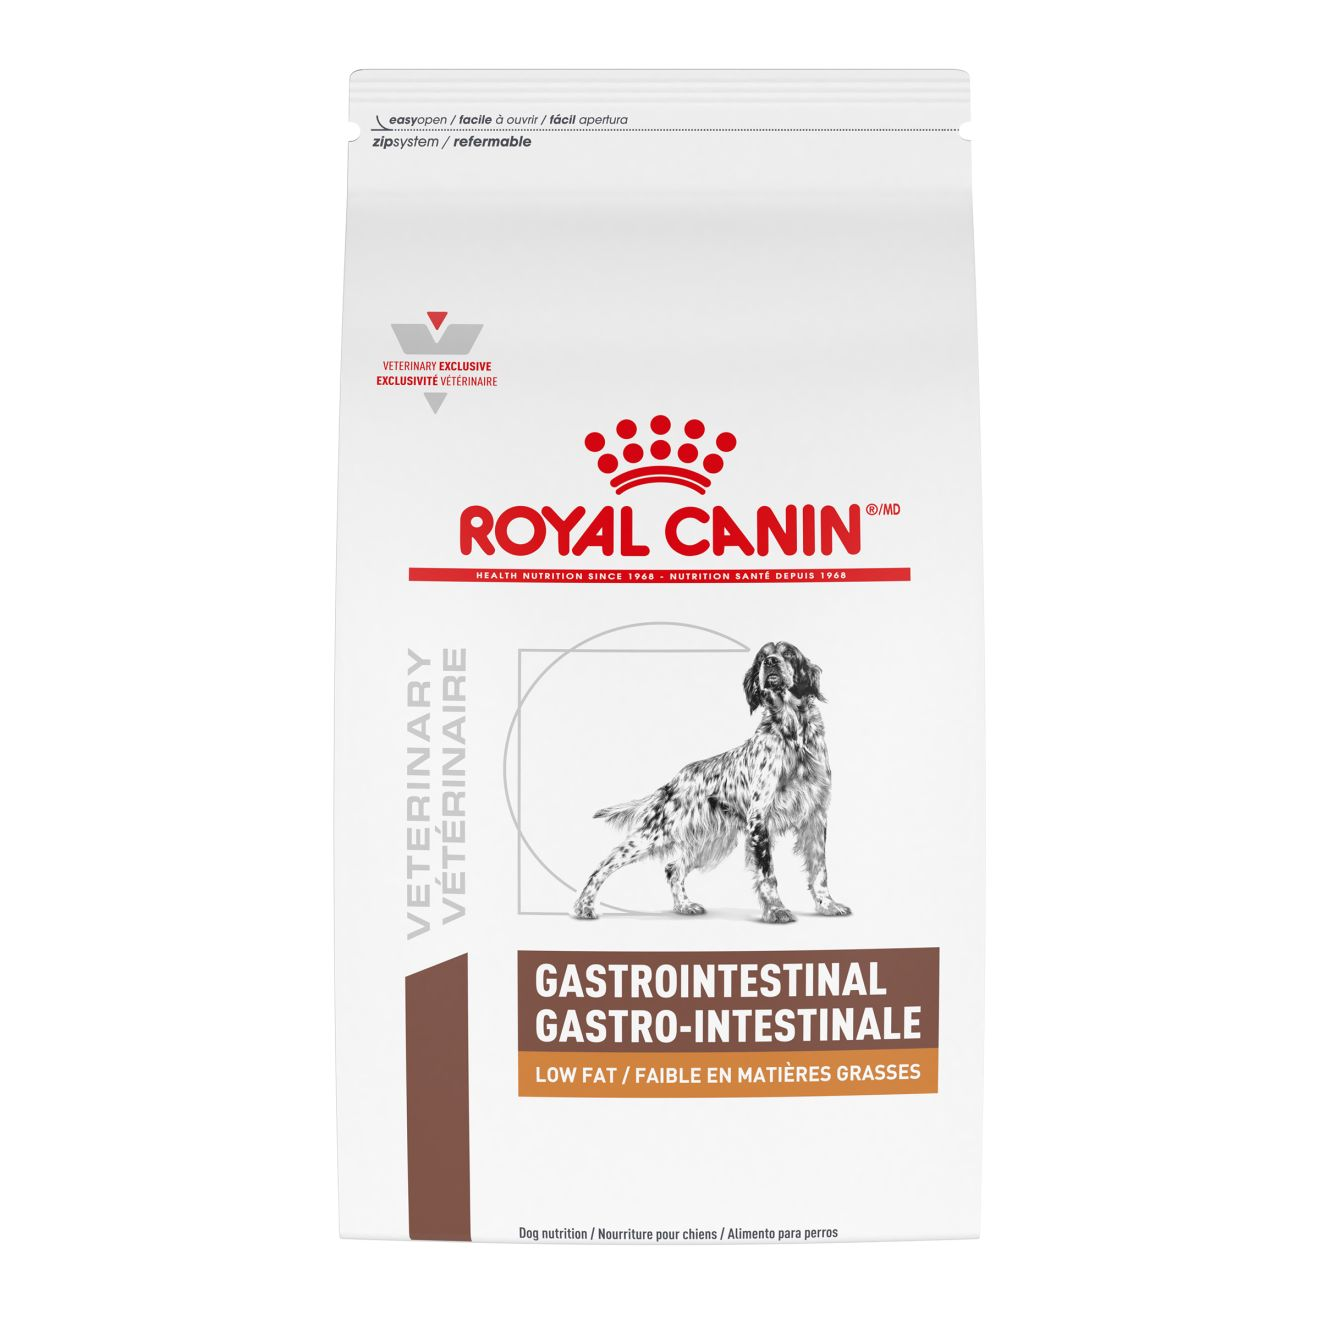 Canine Gastro-Intestinale Faible En Matières Grasses